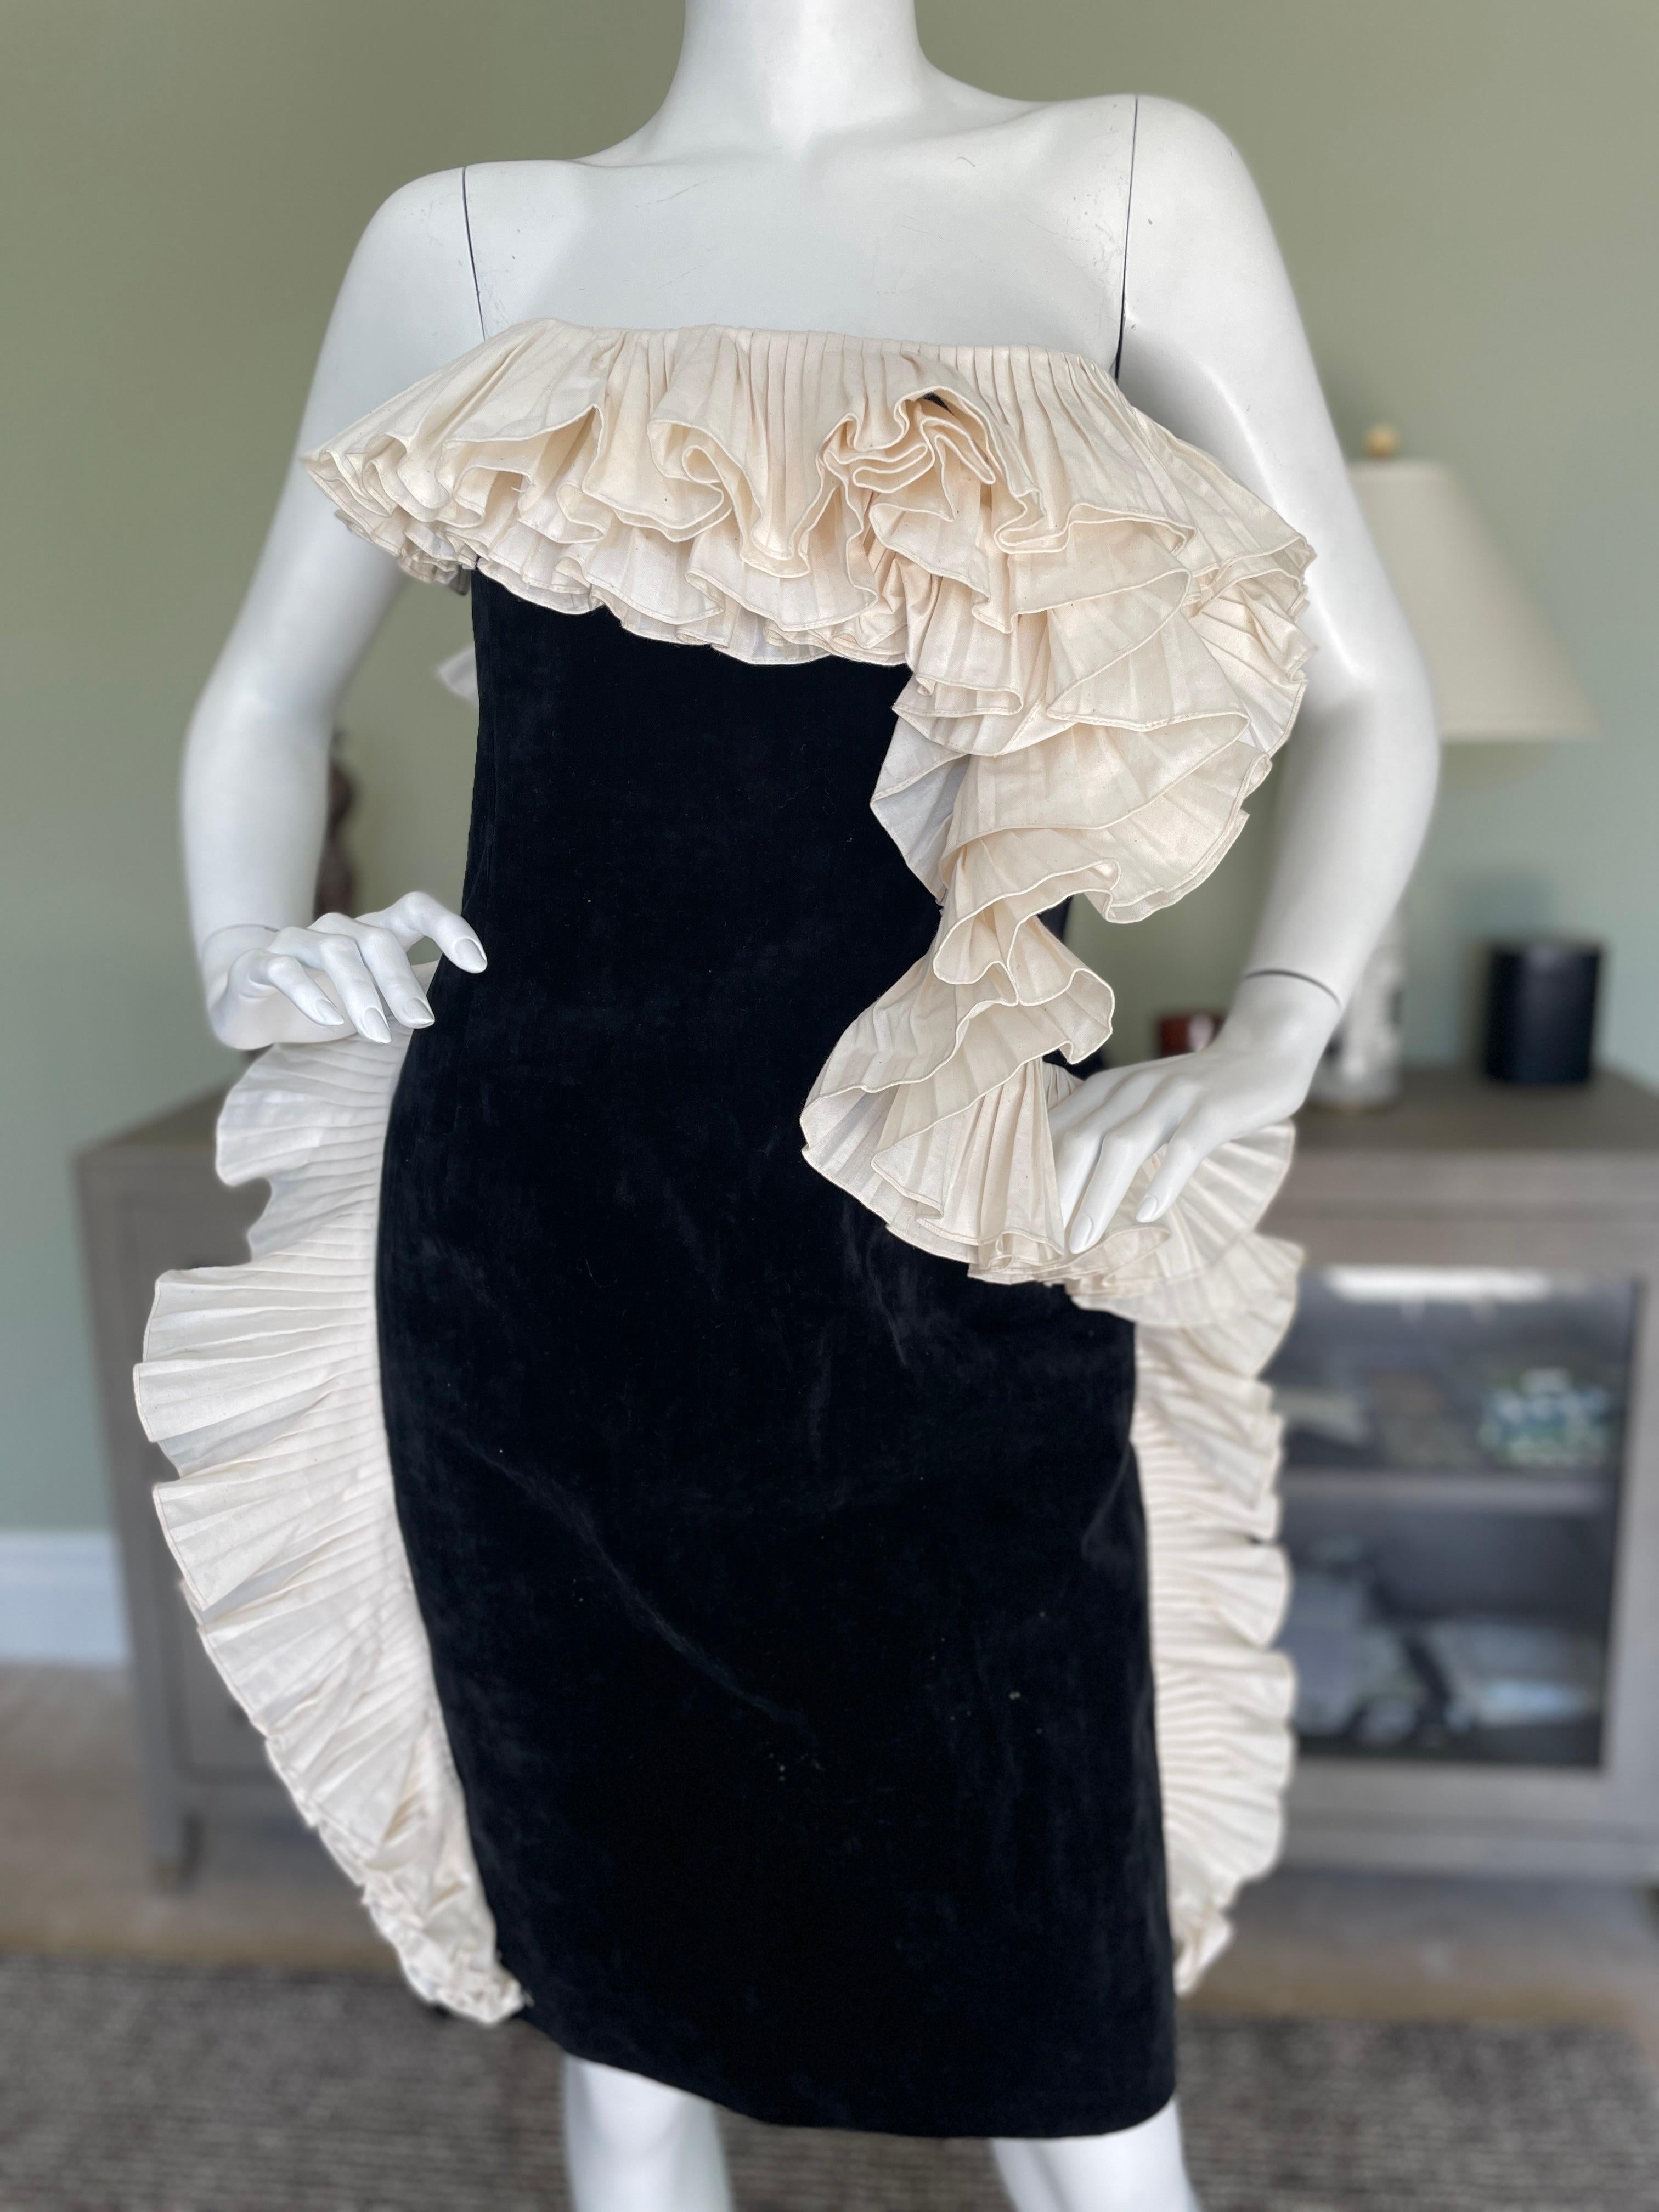 Gray Lanvin by Alber Elbaz Black Velvet Dress w Dramatic White Ruffle from Fall 2012 For Sale